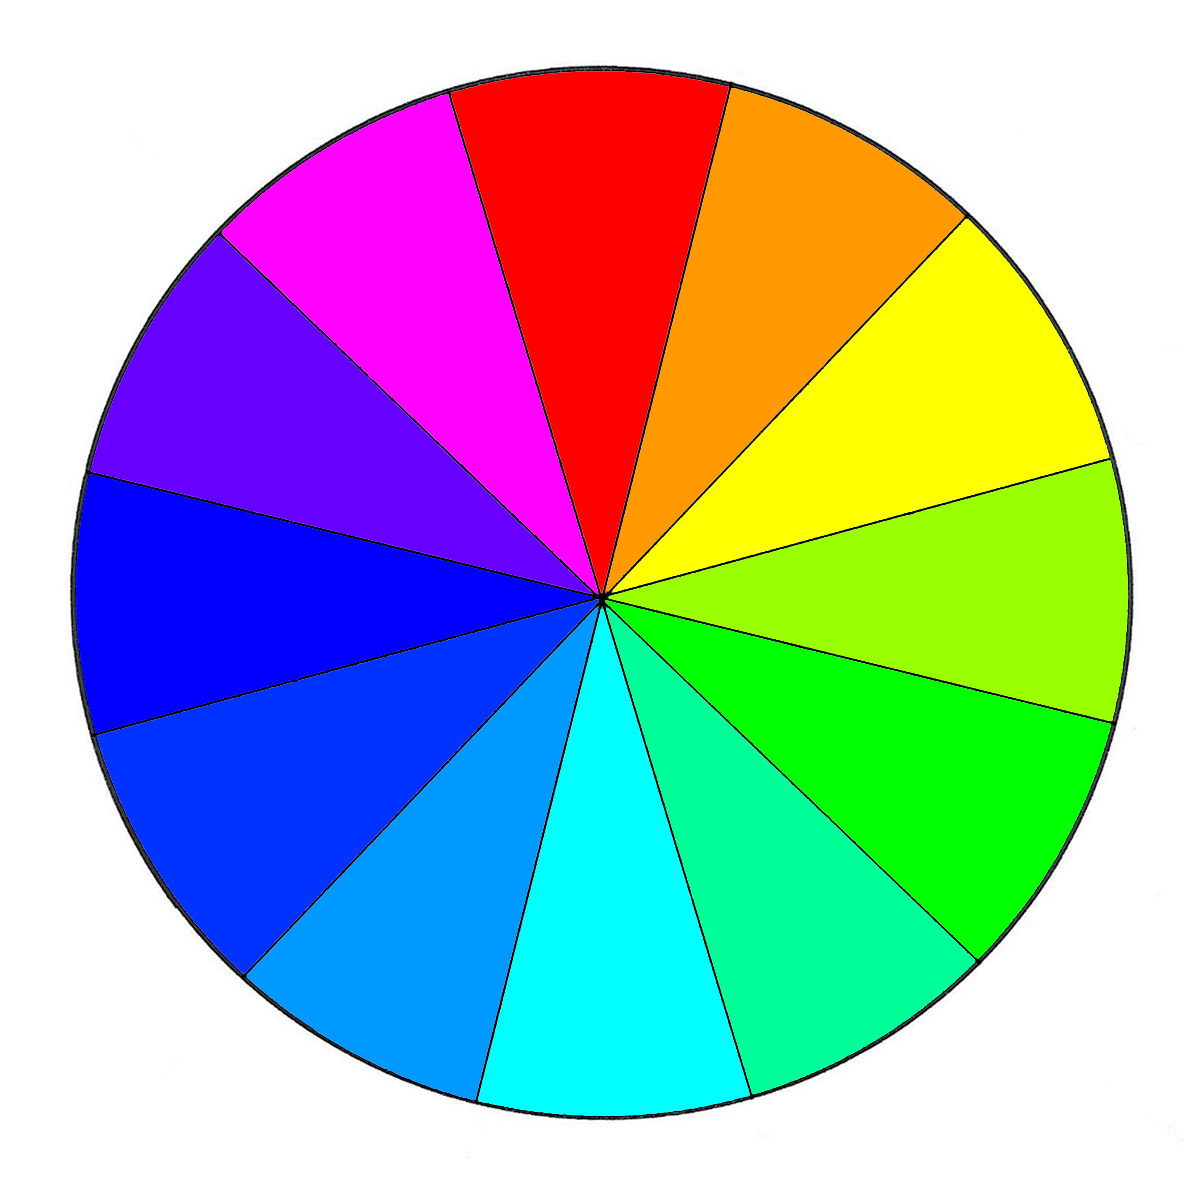 Спектр всех цветов какой цвет. Цветовой круг РГБ. РГБ круг. Цветовой круг РЖБ. Спектр цвета спектра цветовой круг.